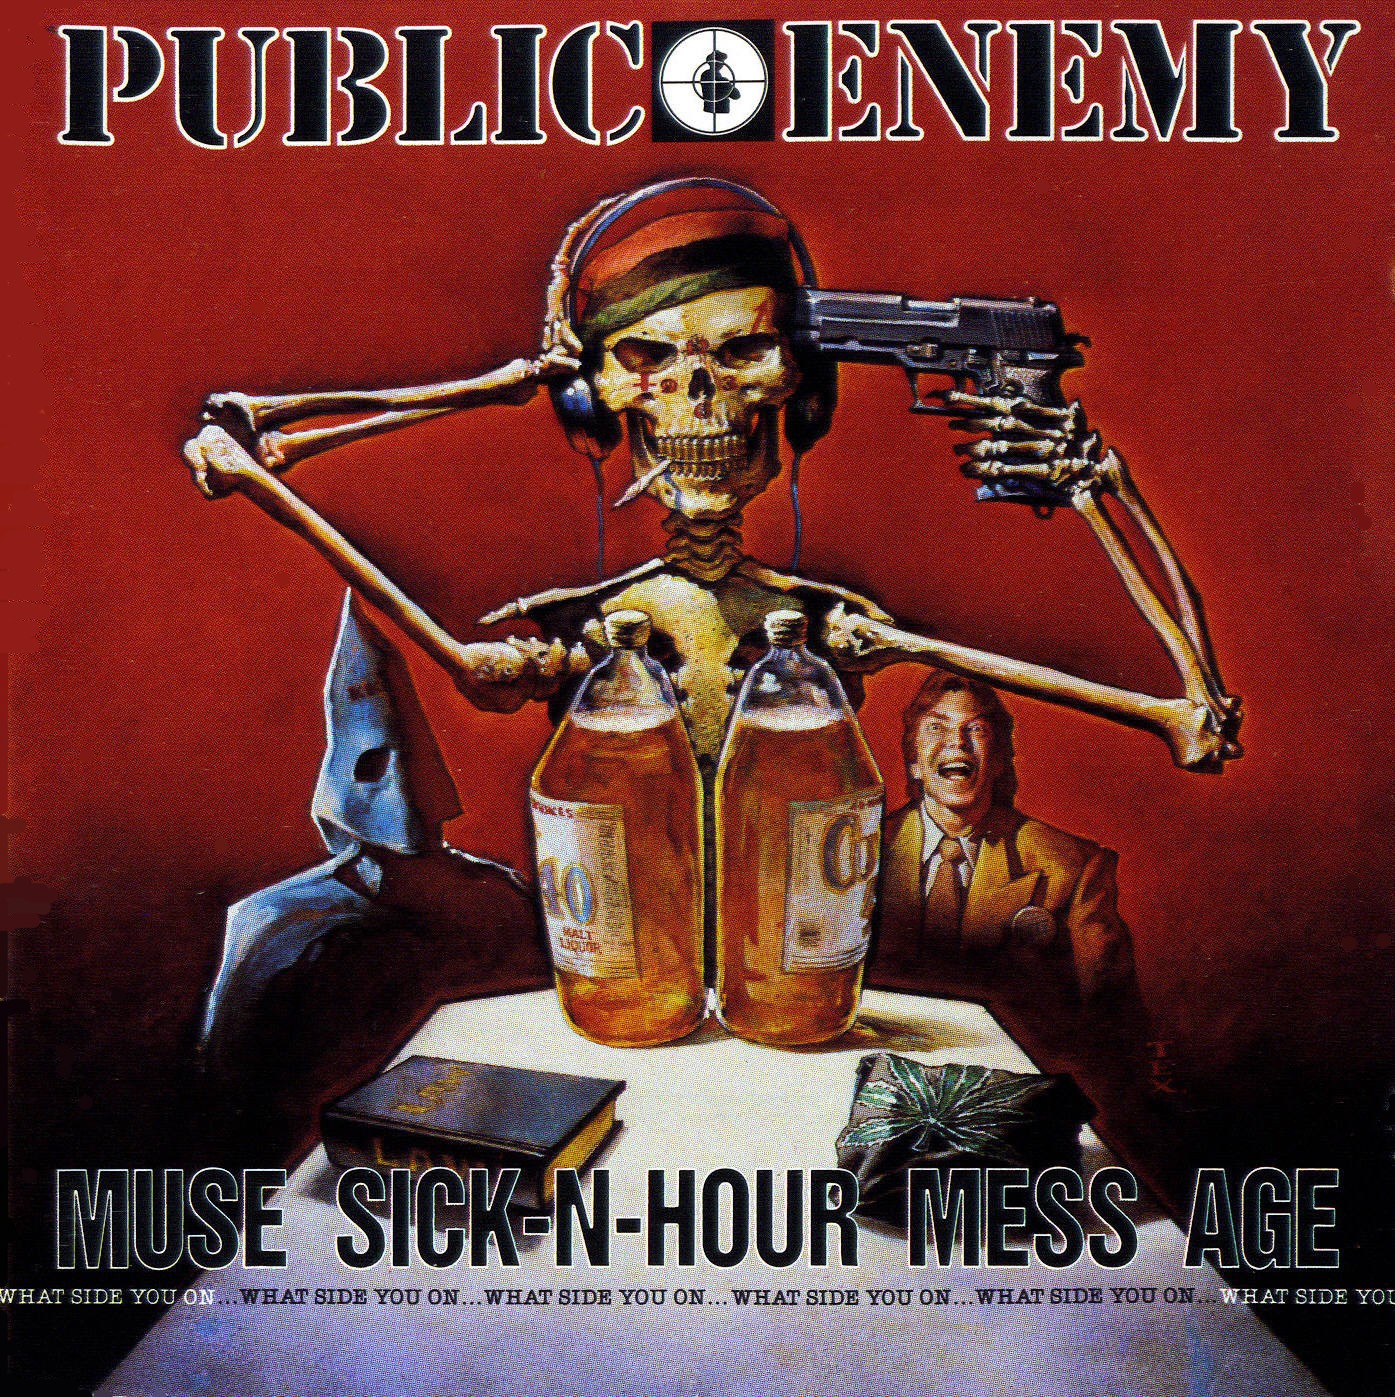 public_enemy_-_1994_muse_sick-n-hour_mess_age.jpg